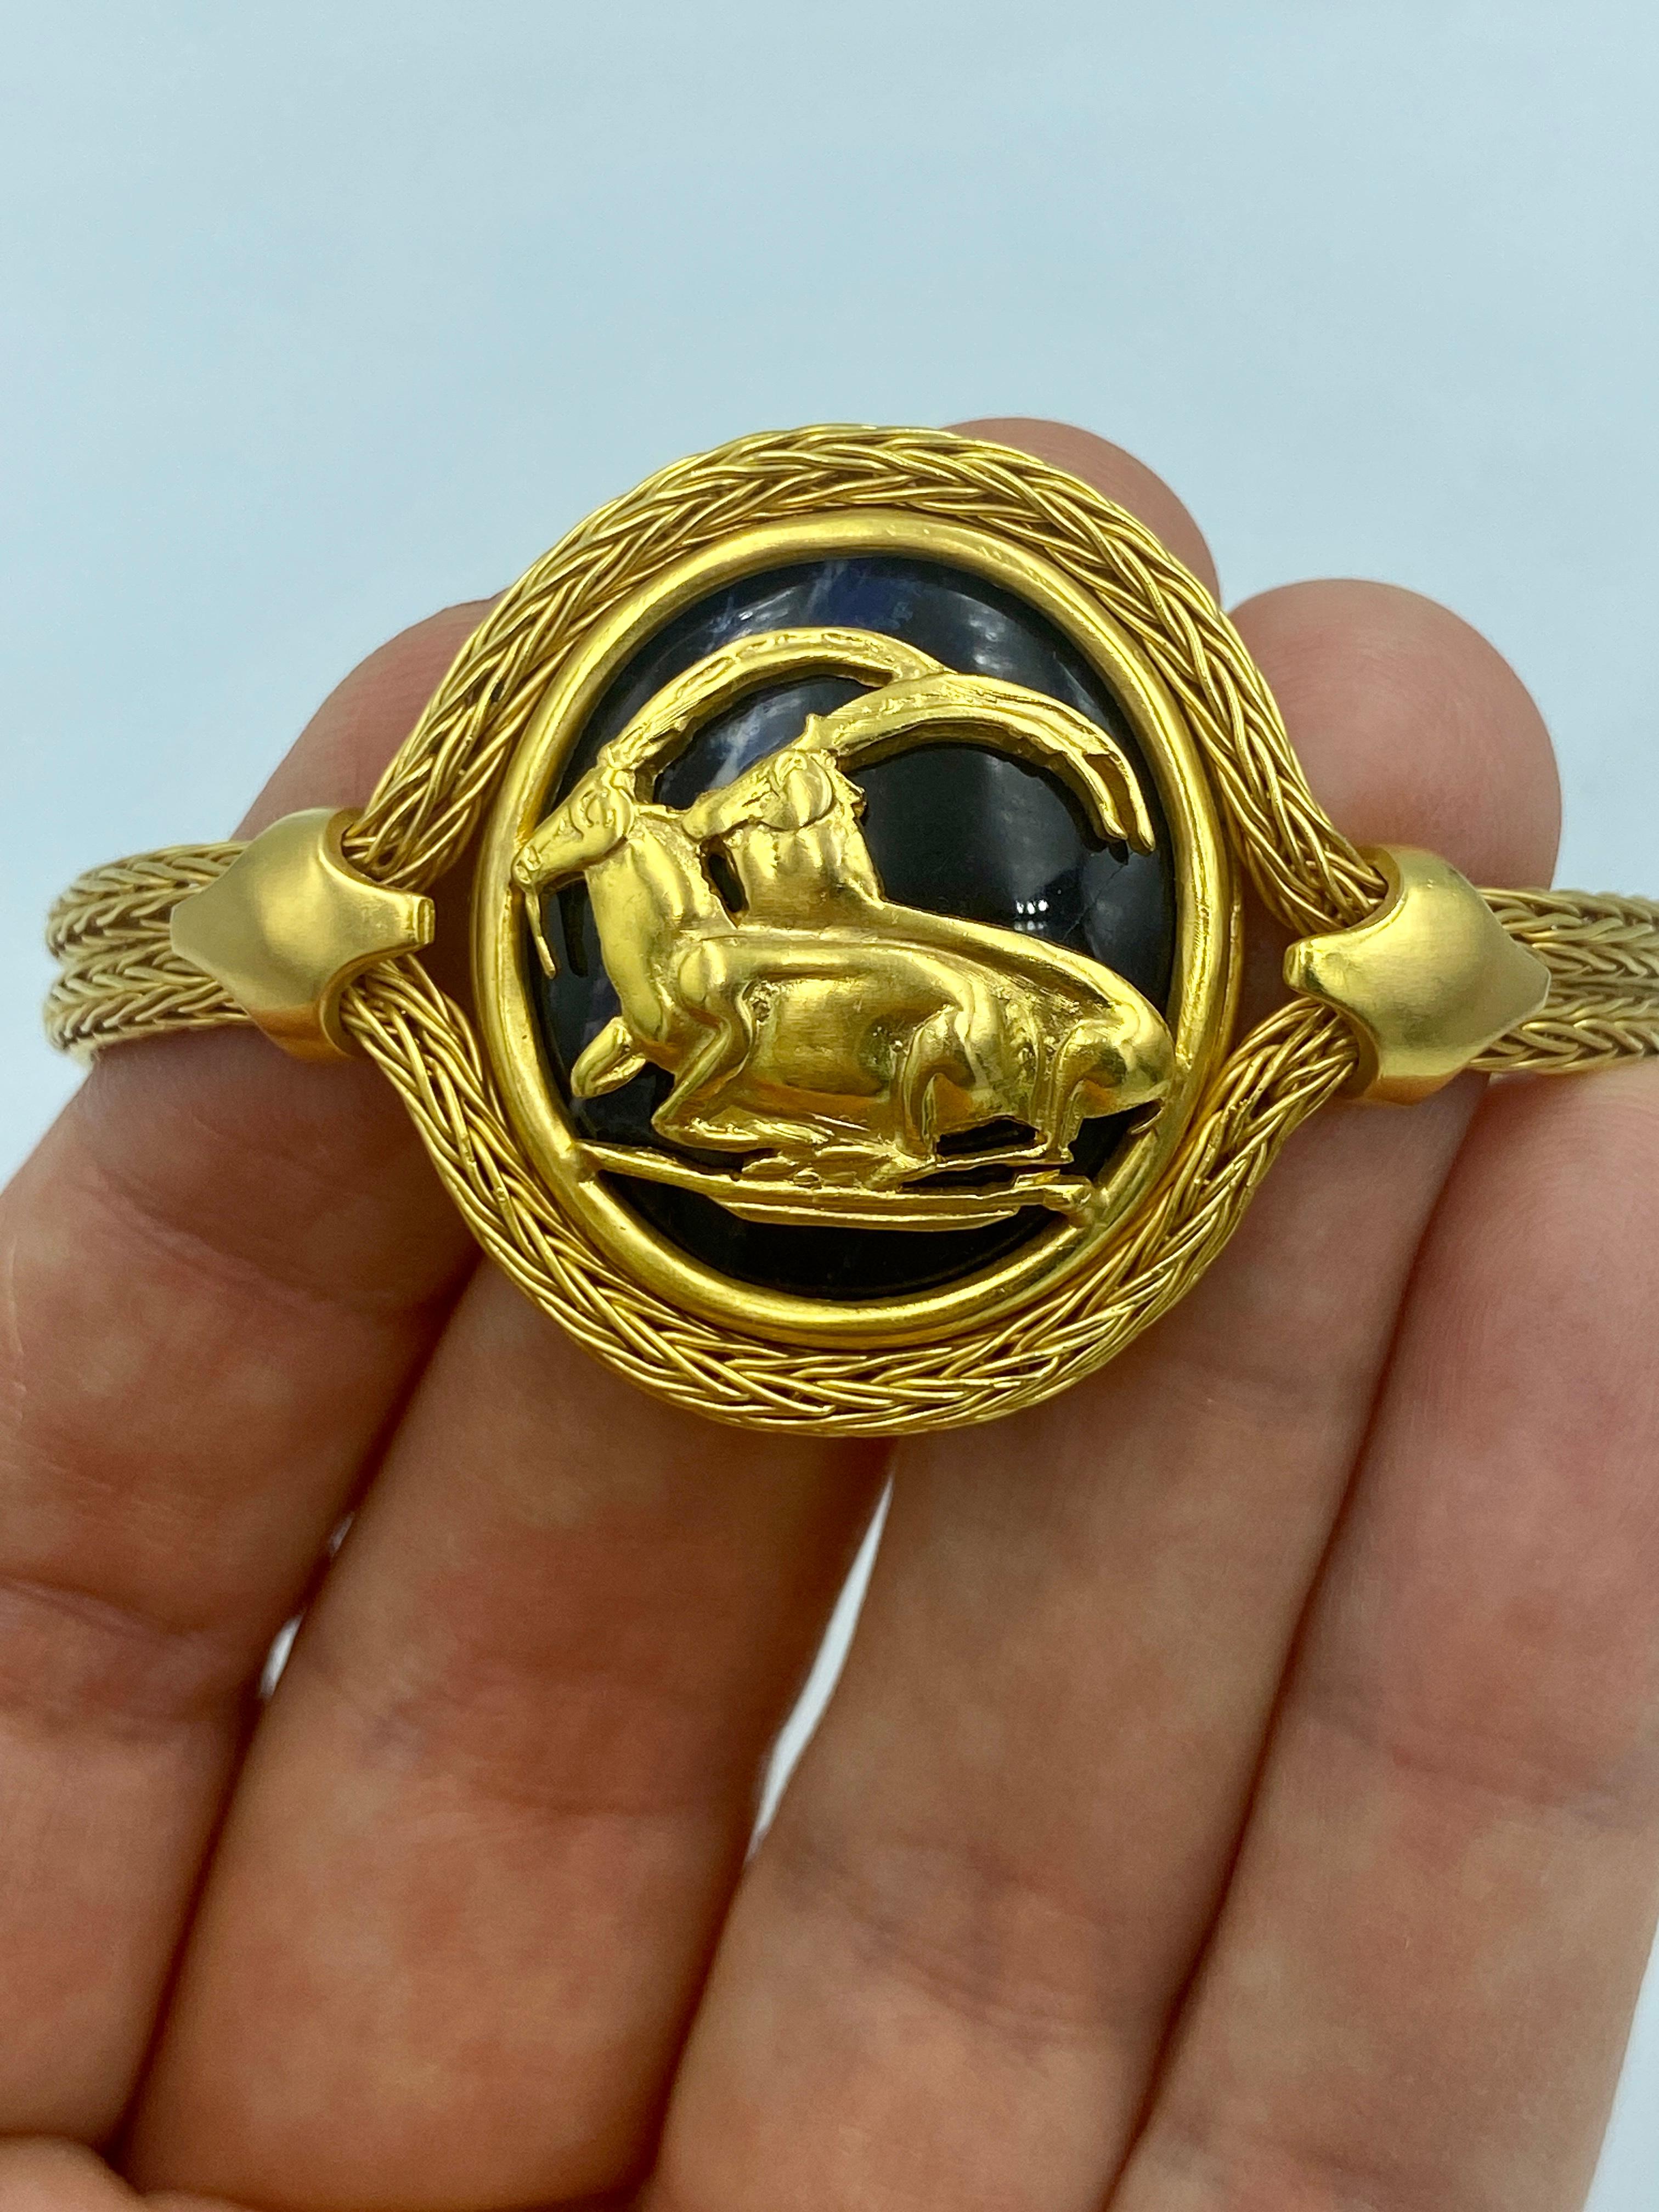 Cabochon Ilias Lalounis 18k gold and lapis lazuli bracelet with mountain goat design For Sale